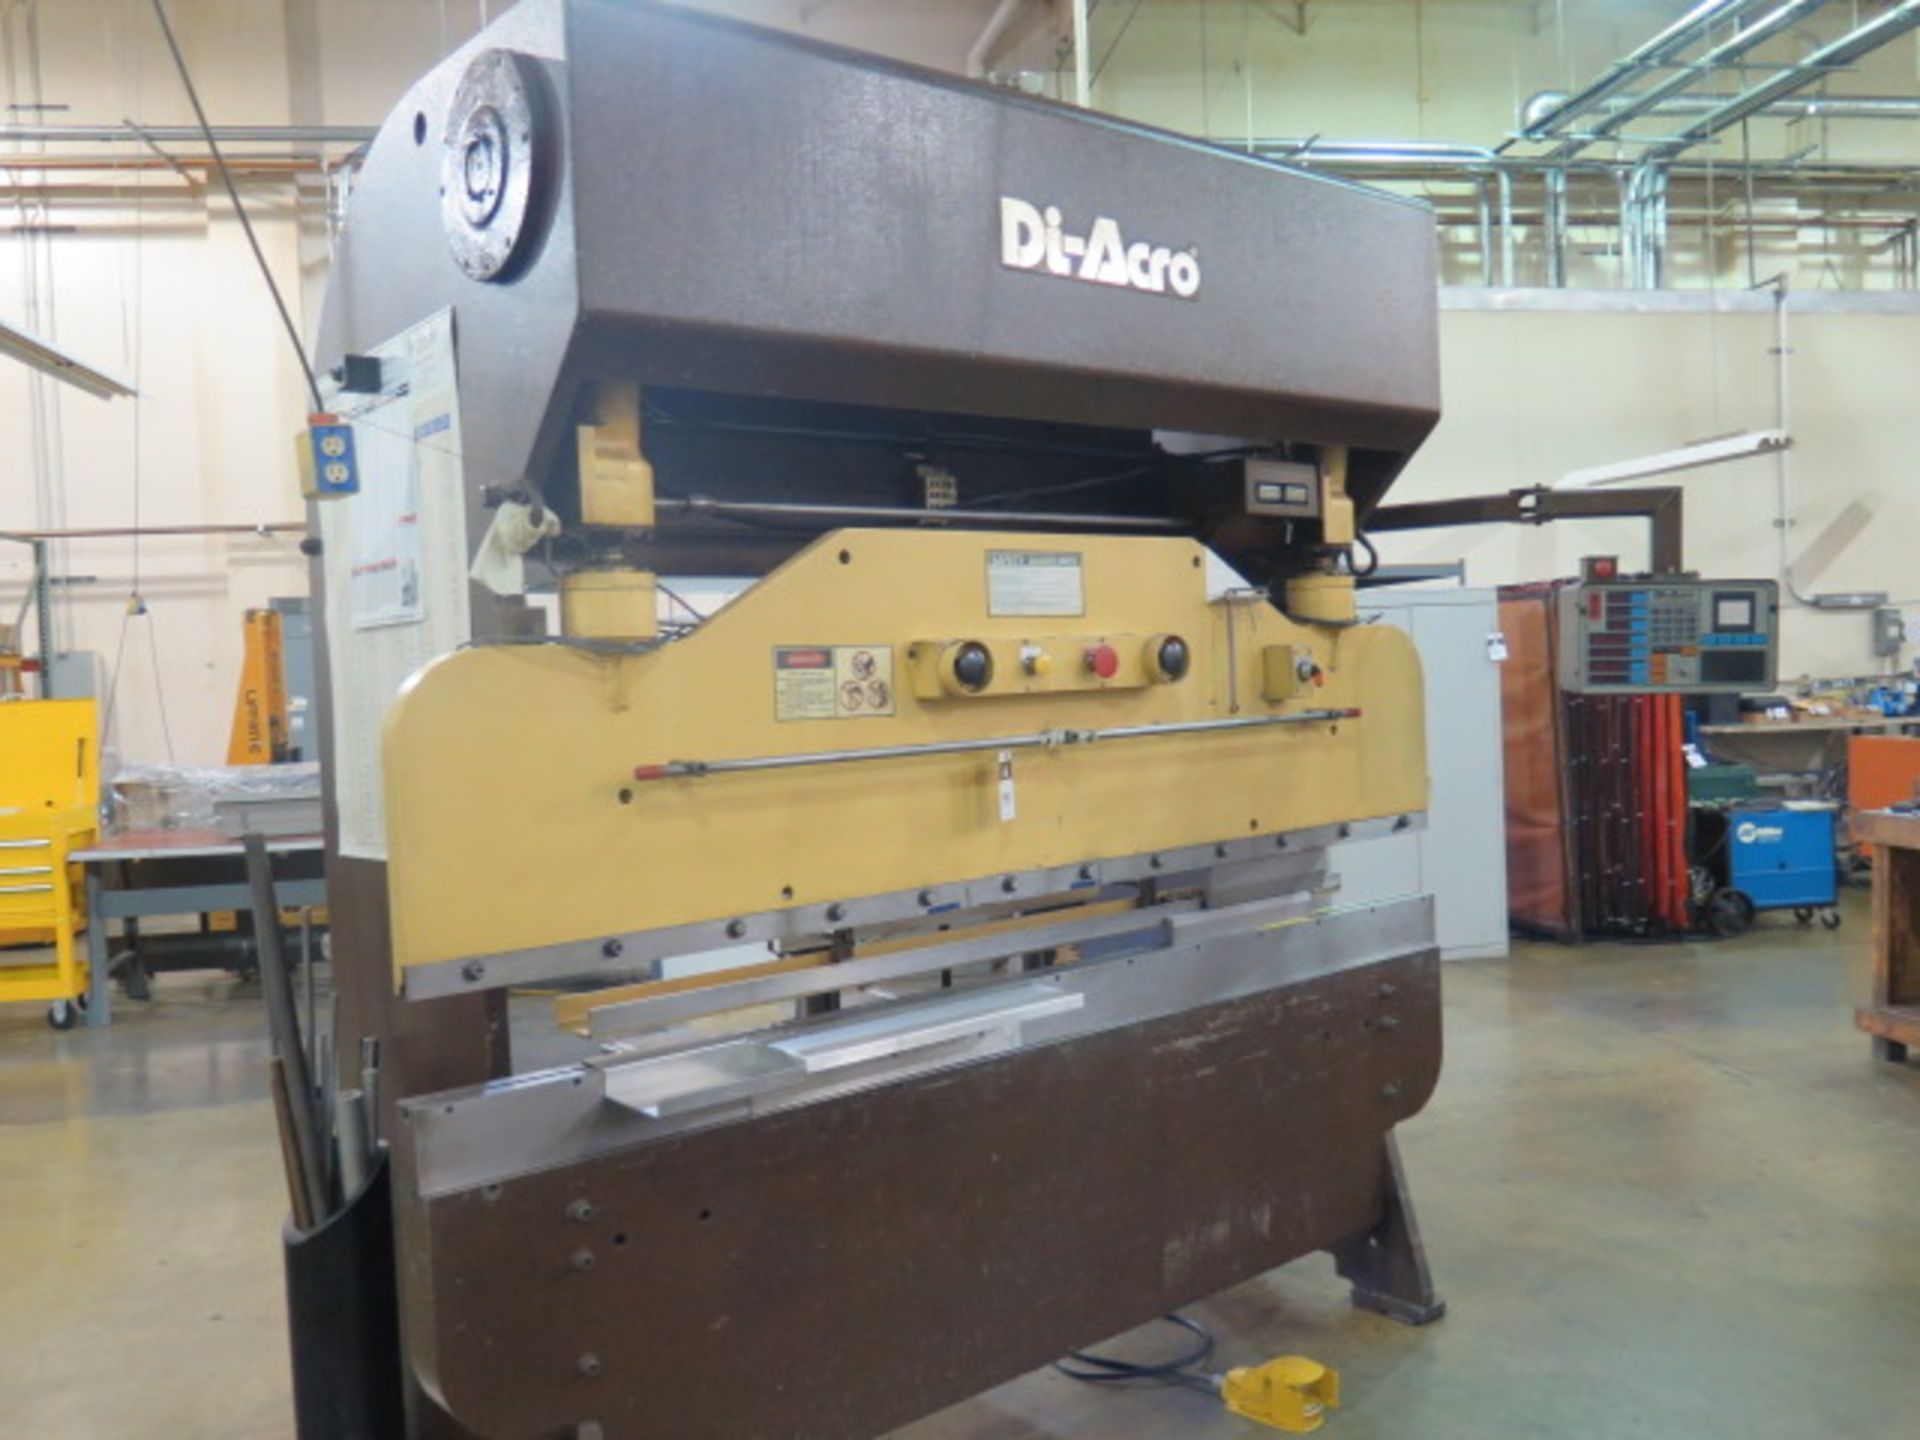 DiAcro 75T8 75 Ton x 8’ Hydrapower CNC Press Brake s/n 0688299 w/ DiAcro Controls, SOLD AS IS - Image 2 of 16